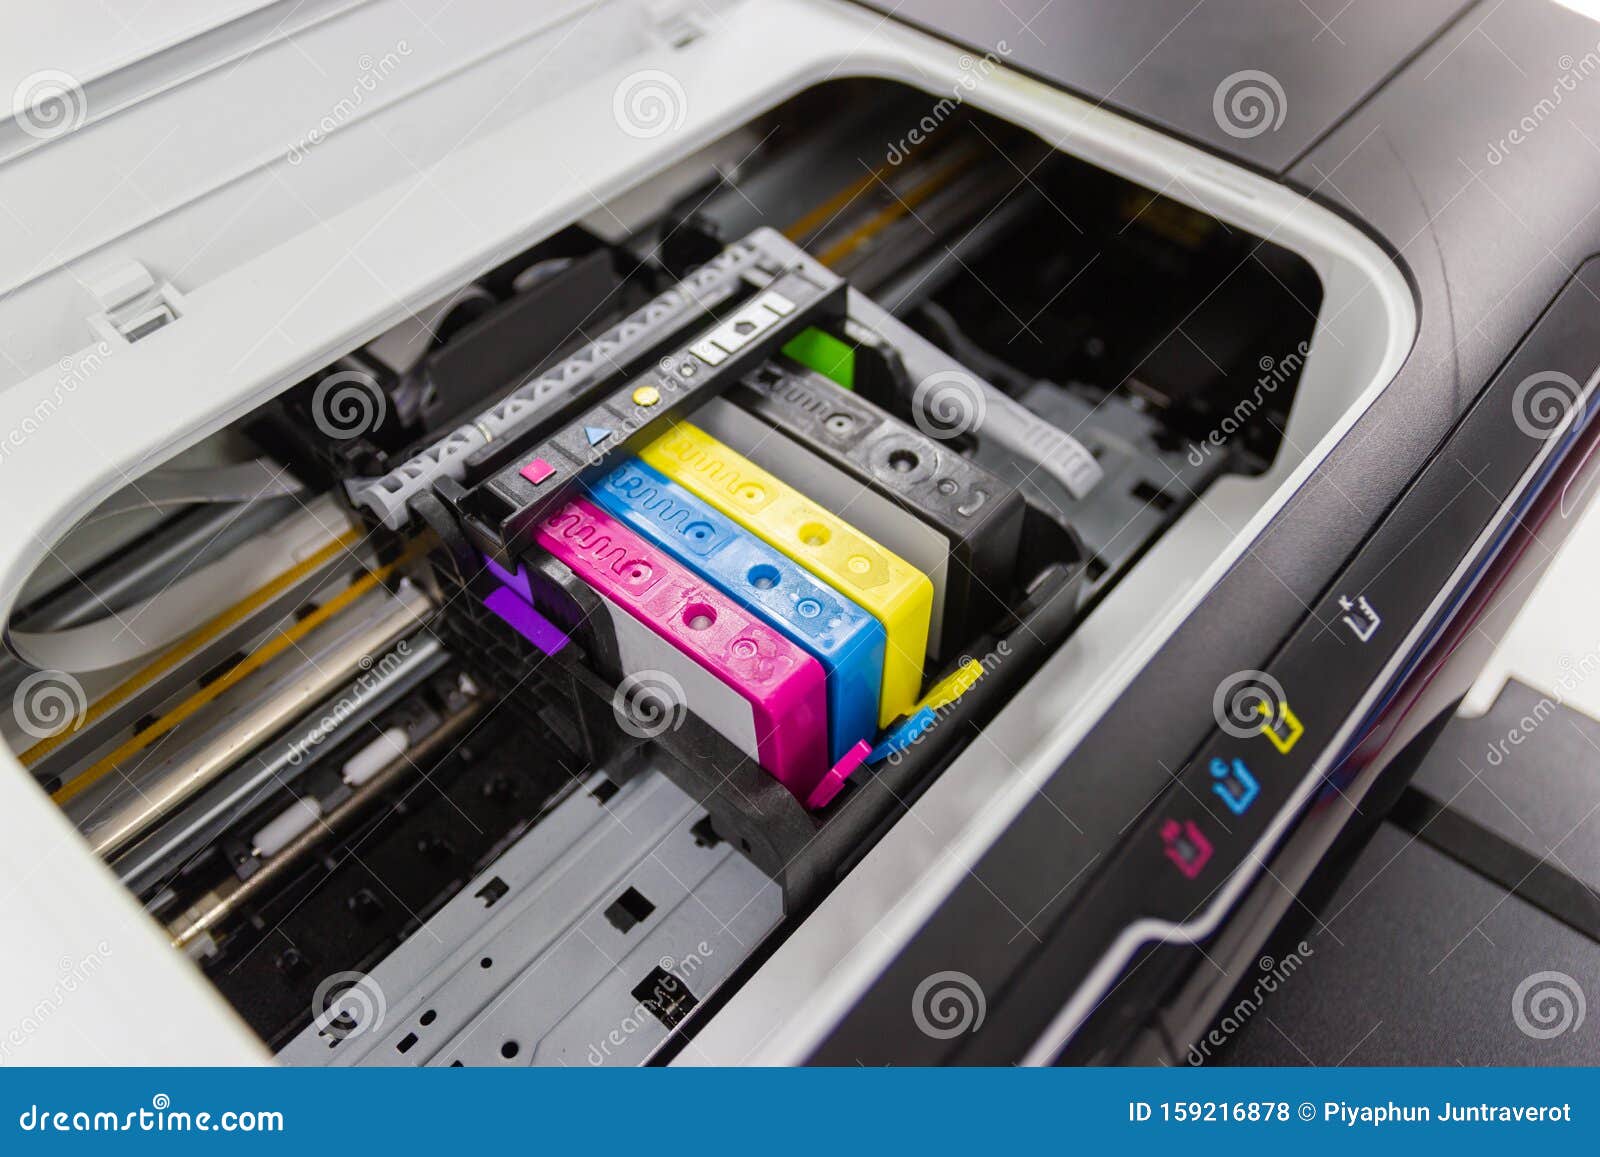 an ink cartridge or inkjet cartridge is a component of an inkjet printer